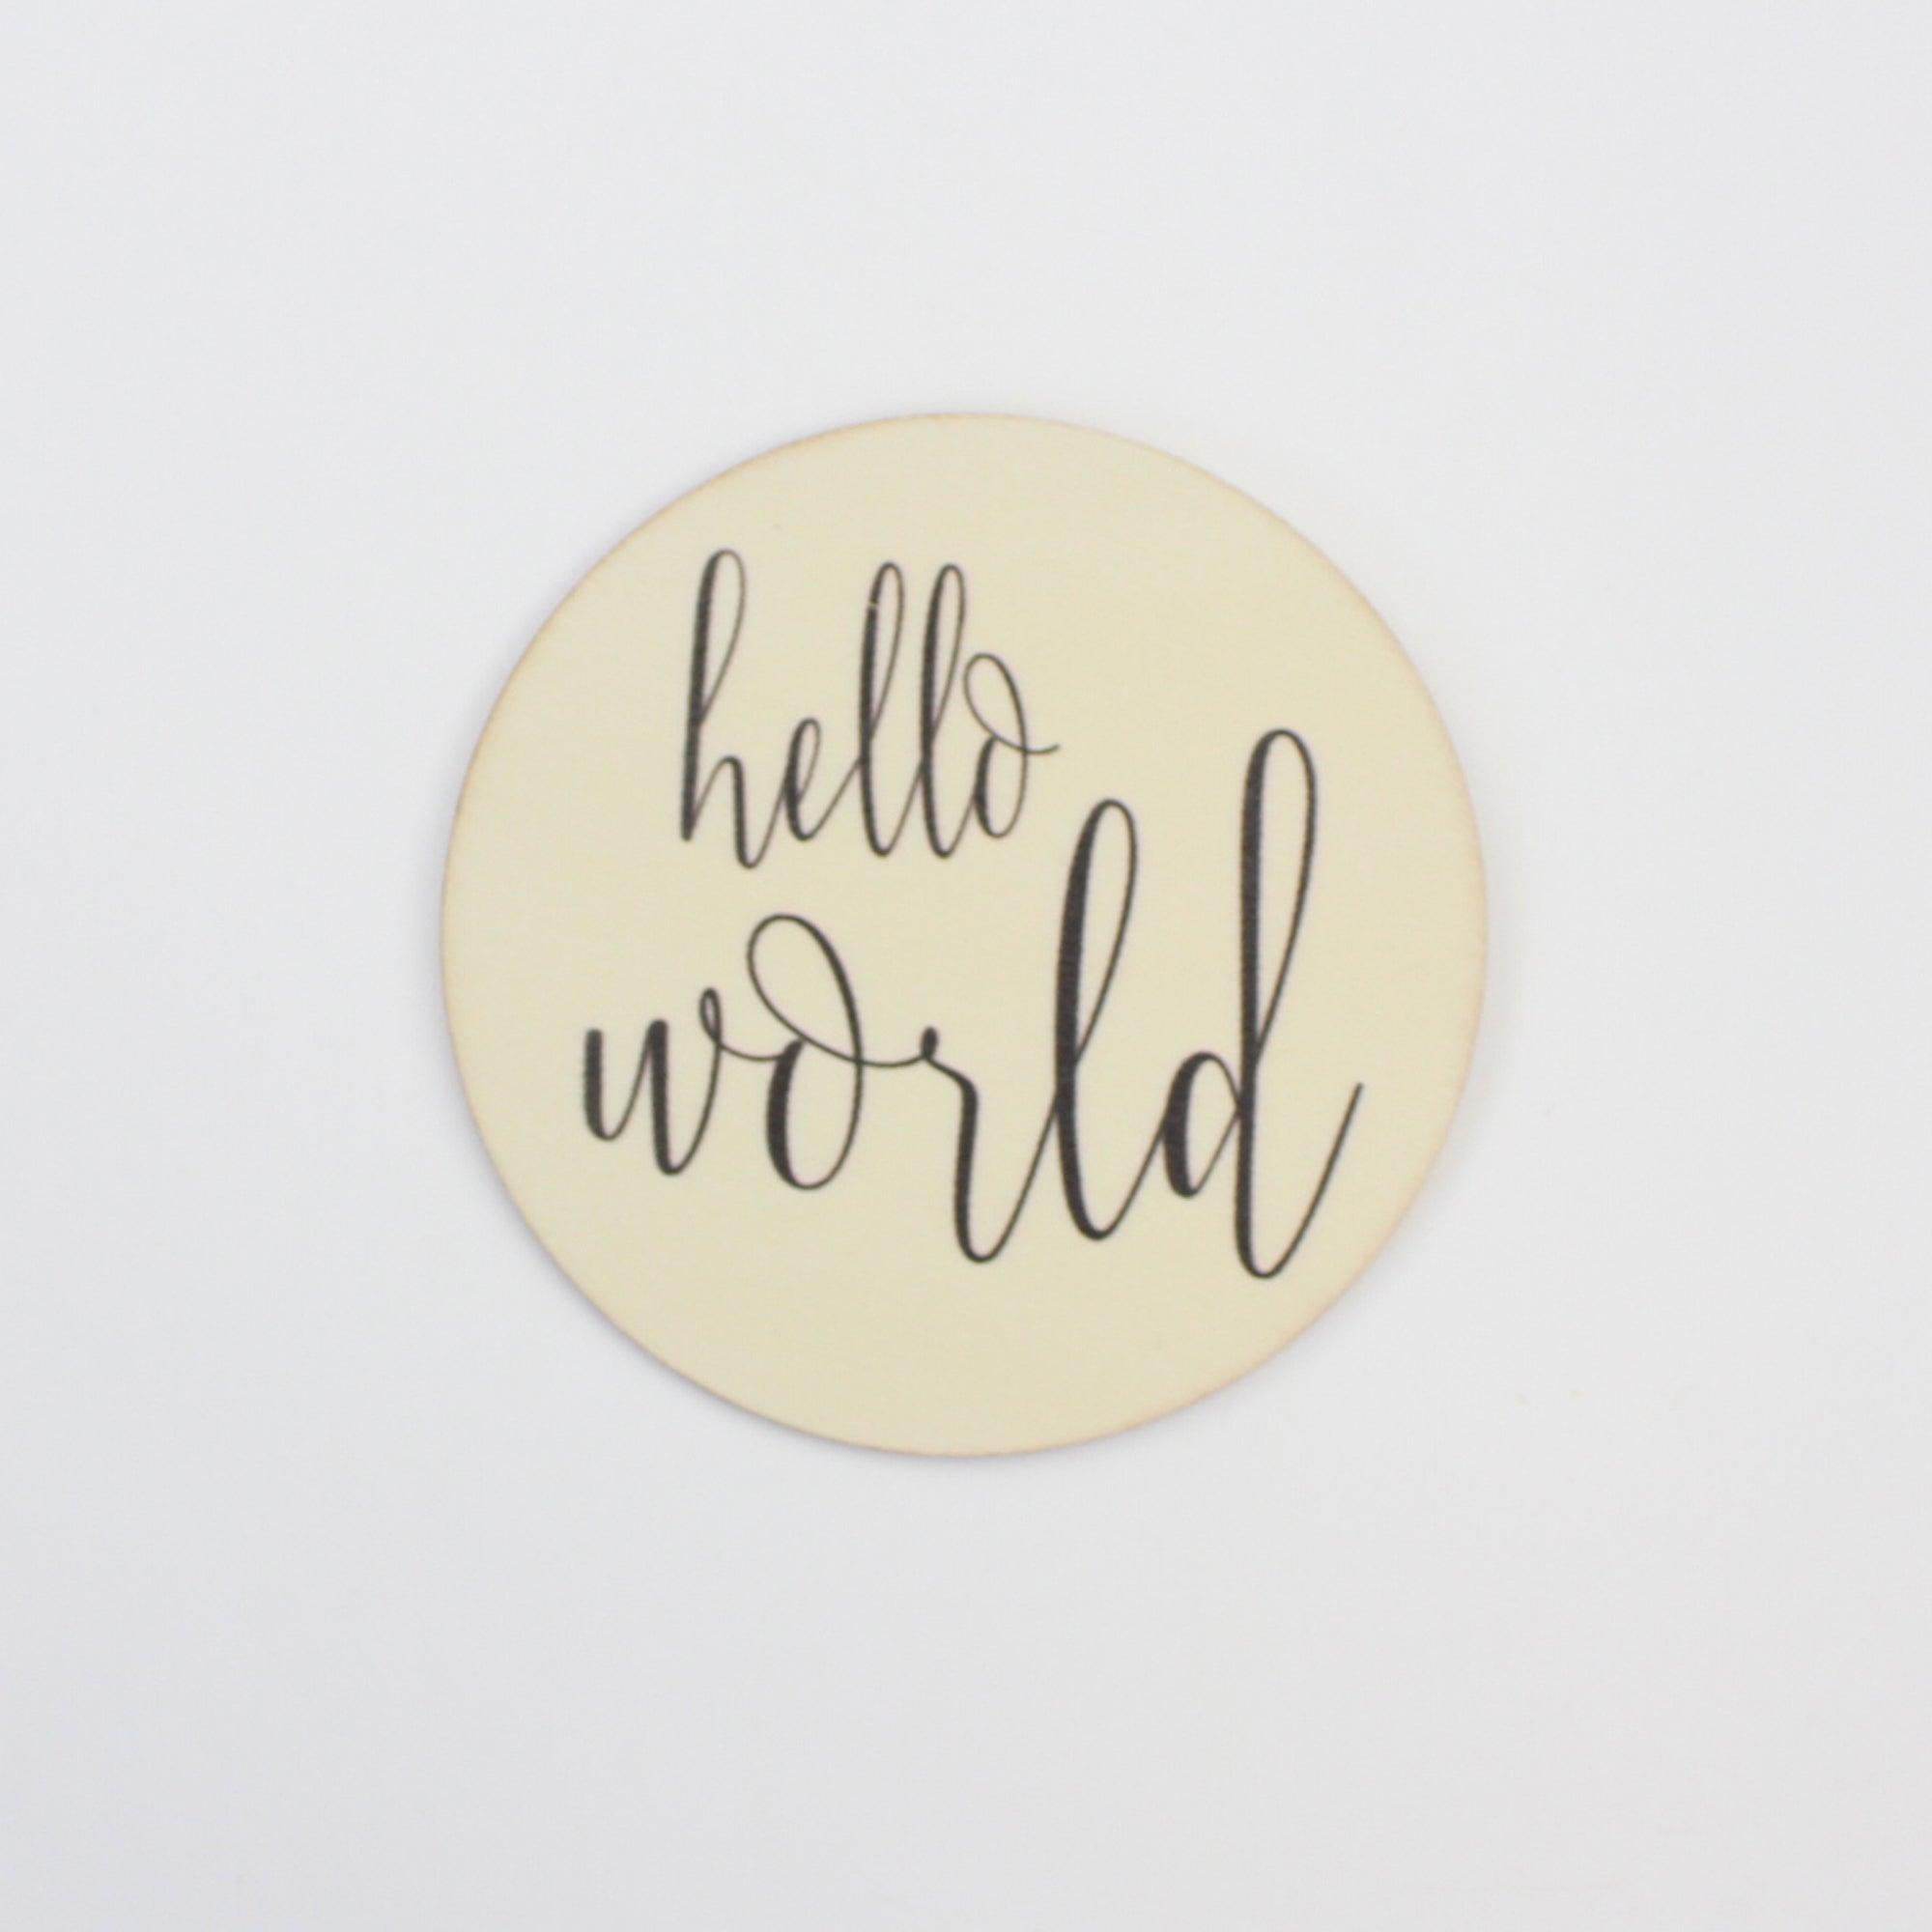 Birth announcement disc that says "Hello World"